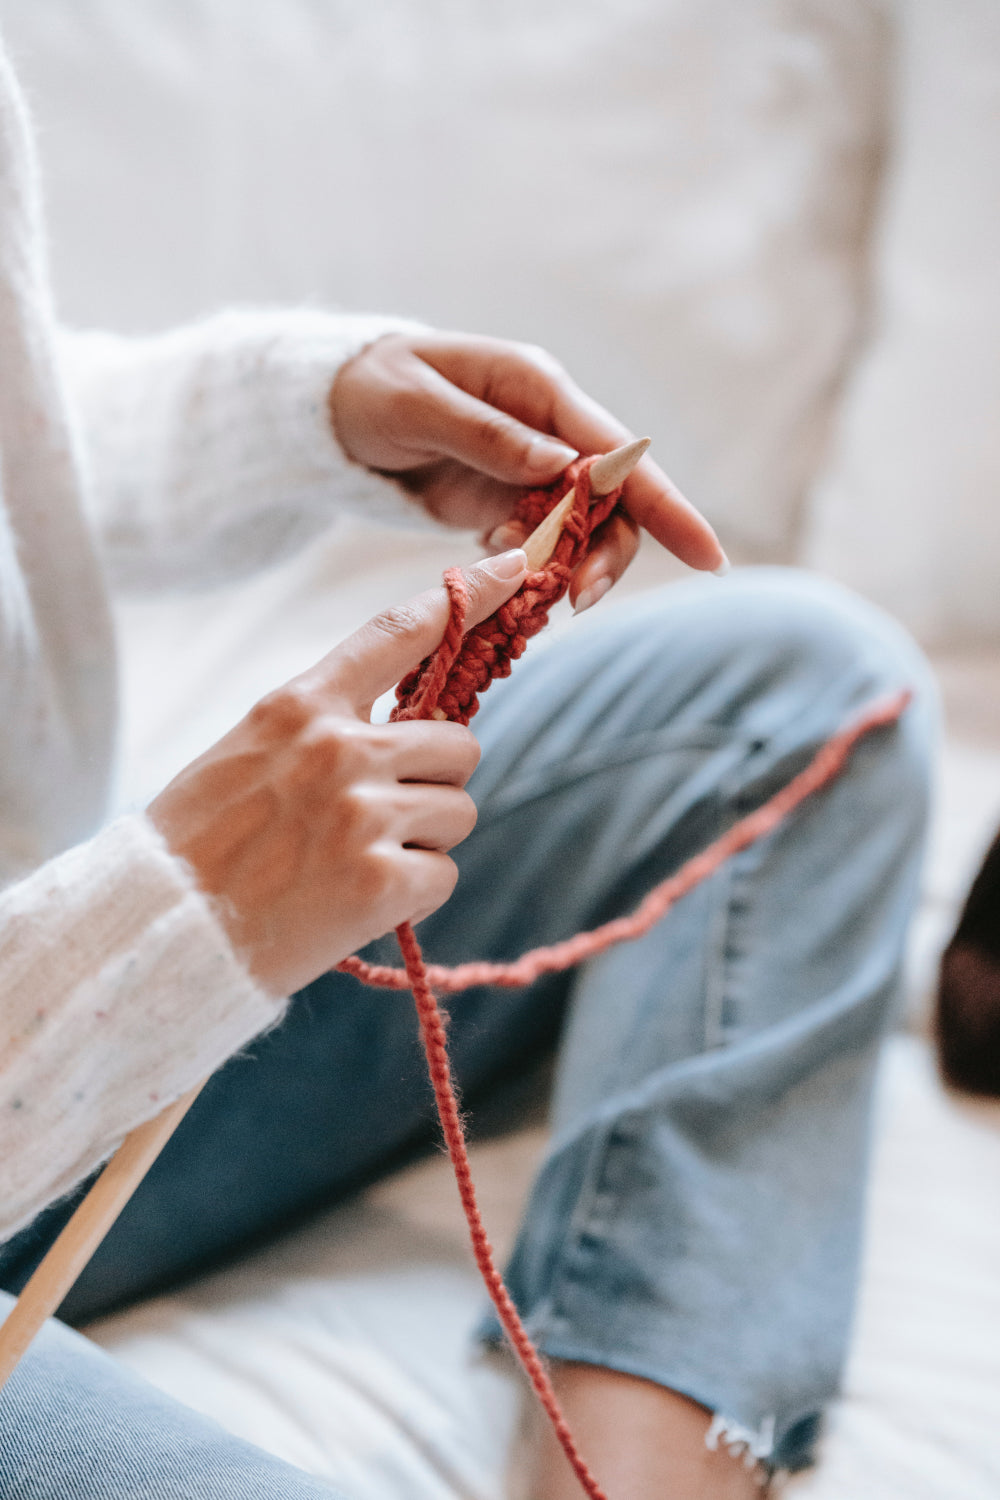 How I Became a Knitting Machine